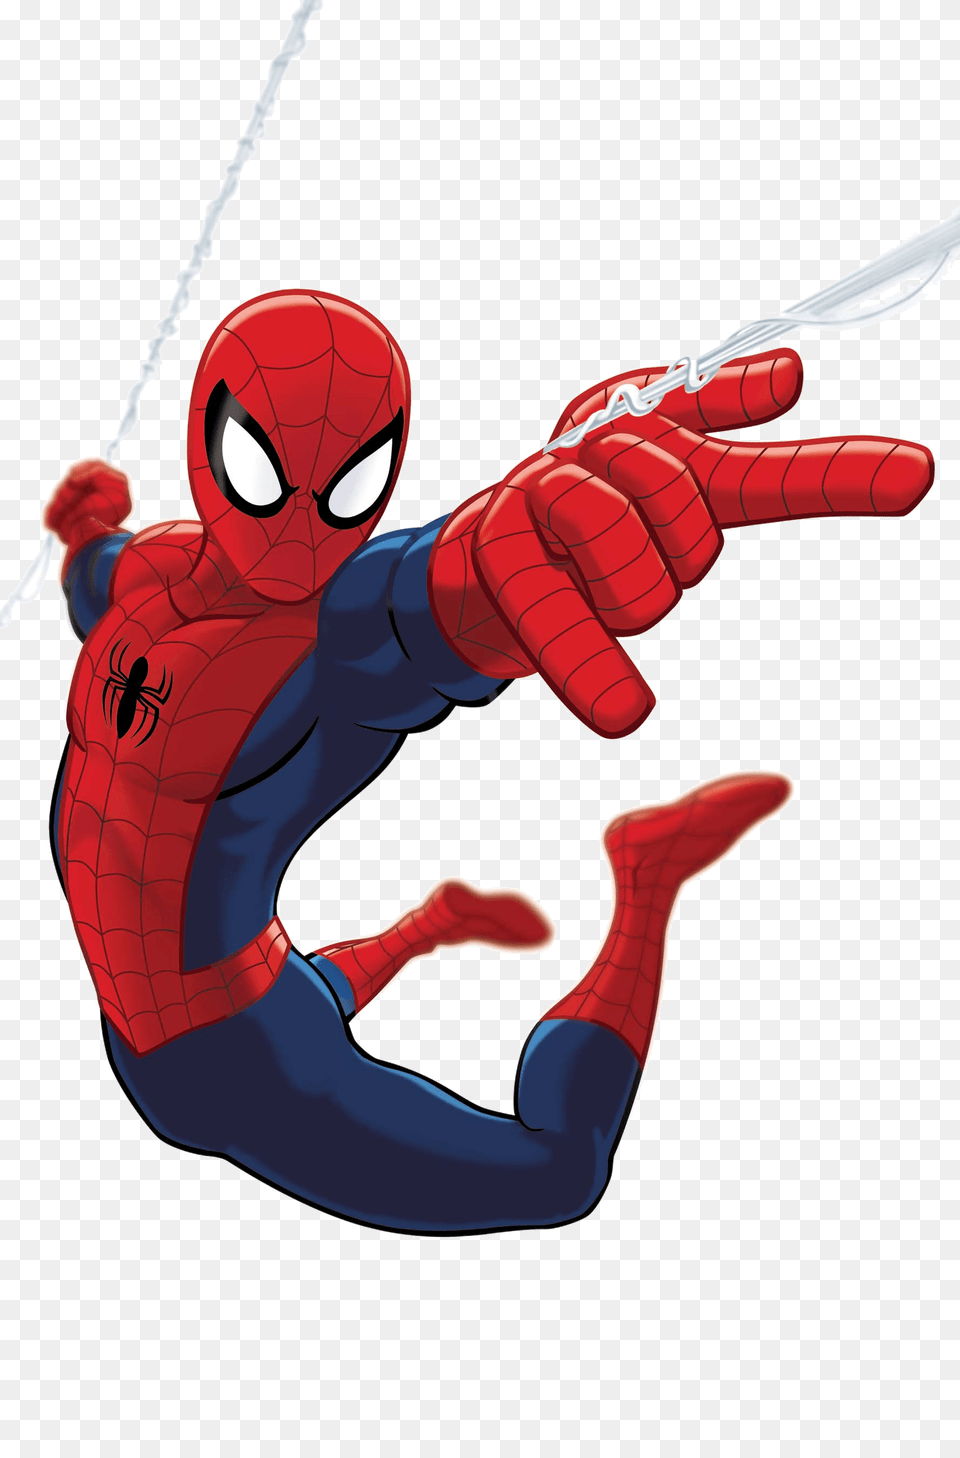 Spiderman Flying Between Buildings, Dynamite, Weapon, Smoke Pipe Free Png Download